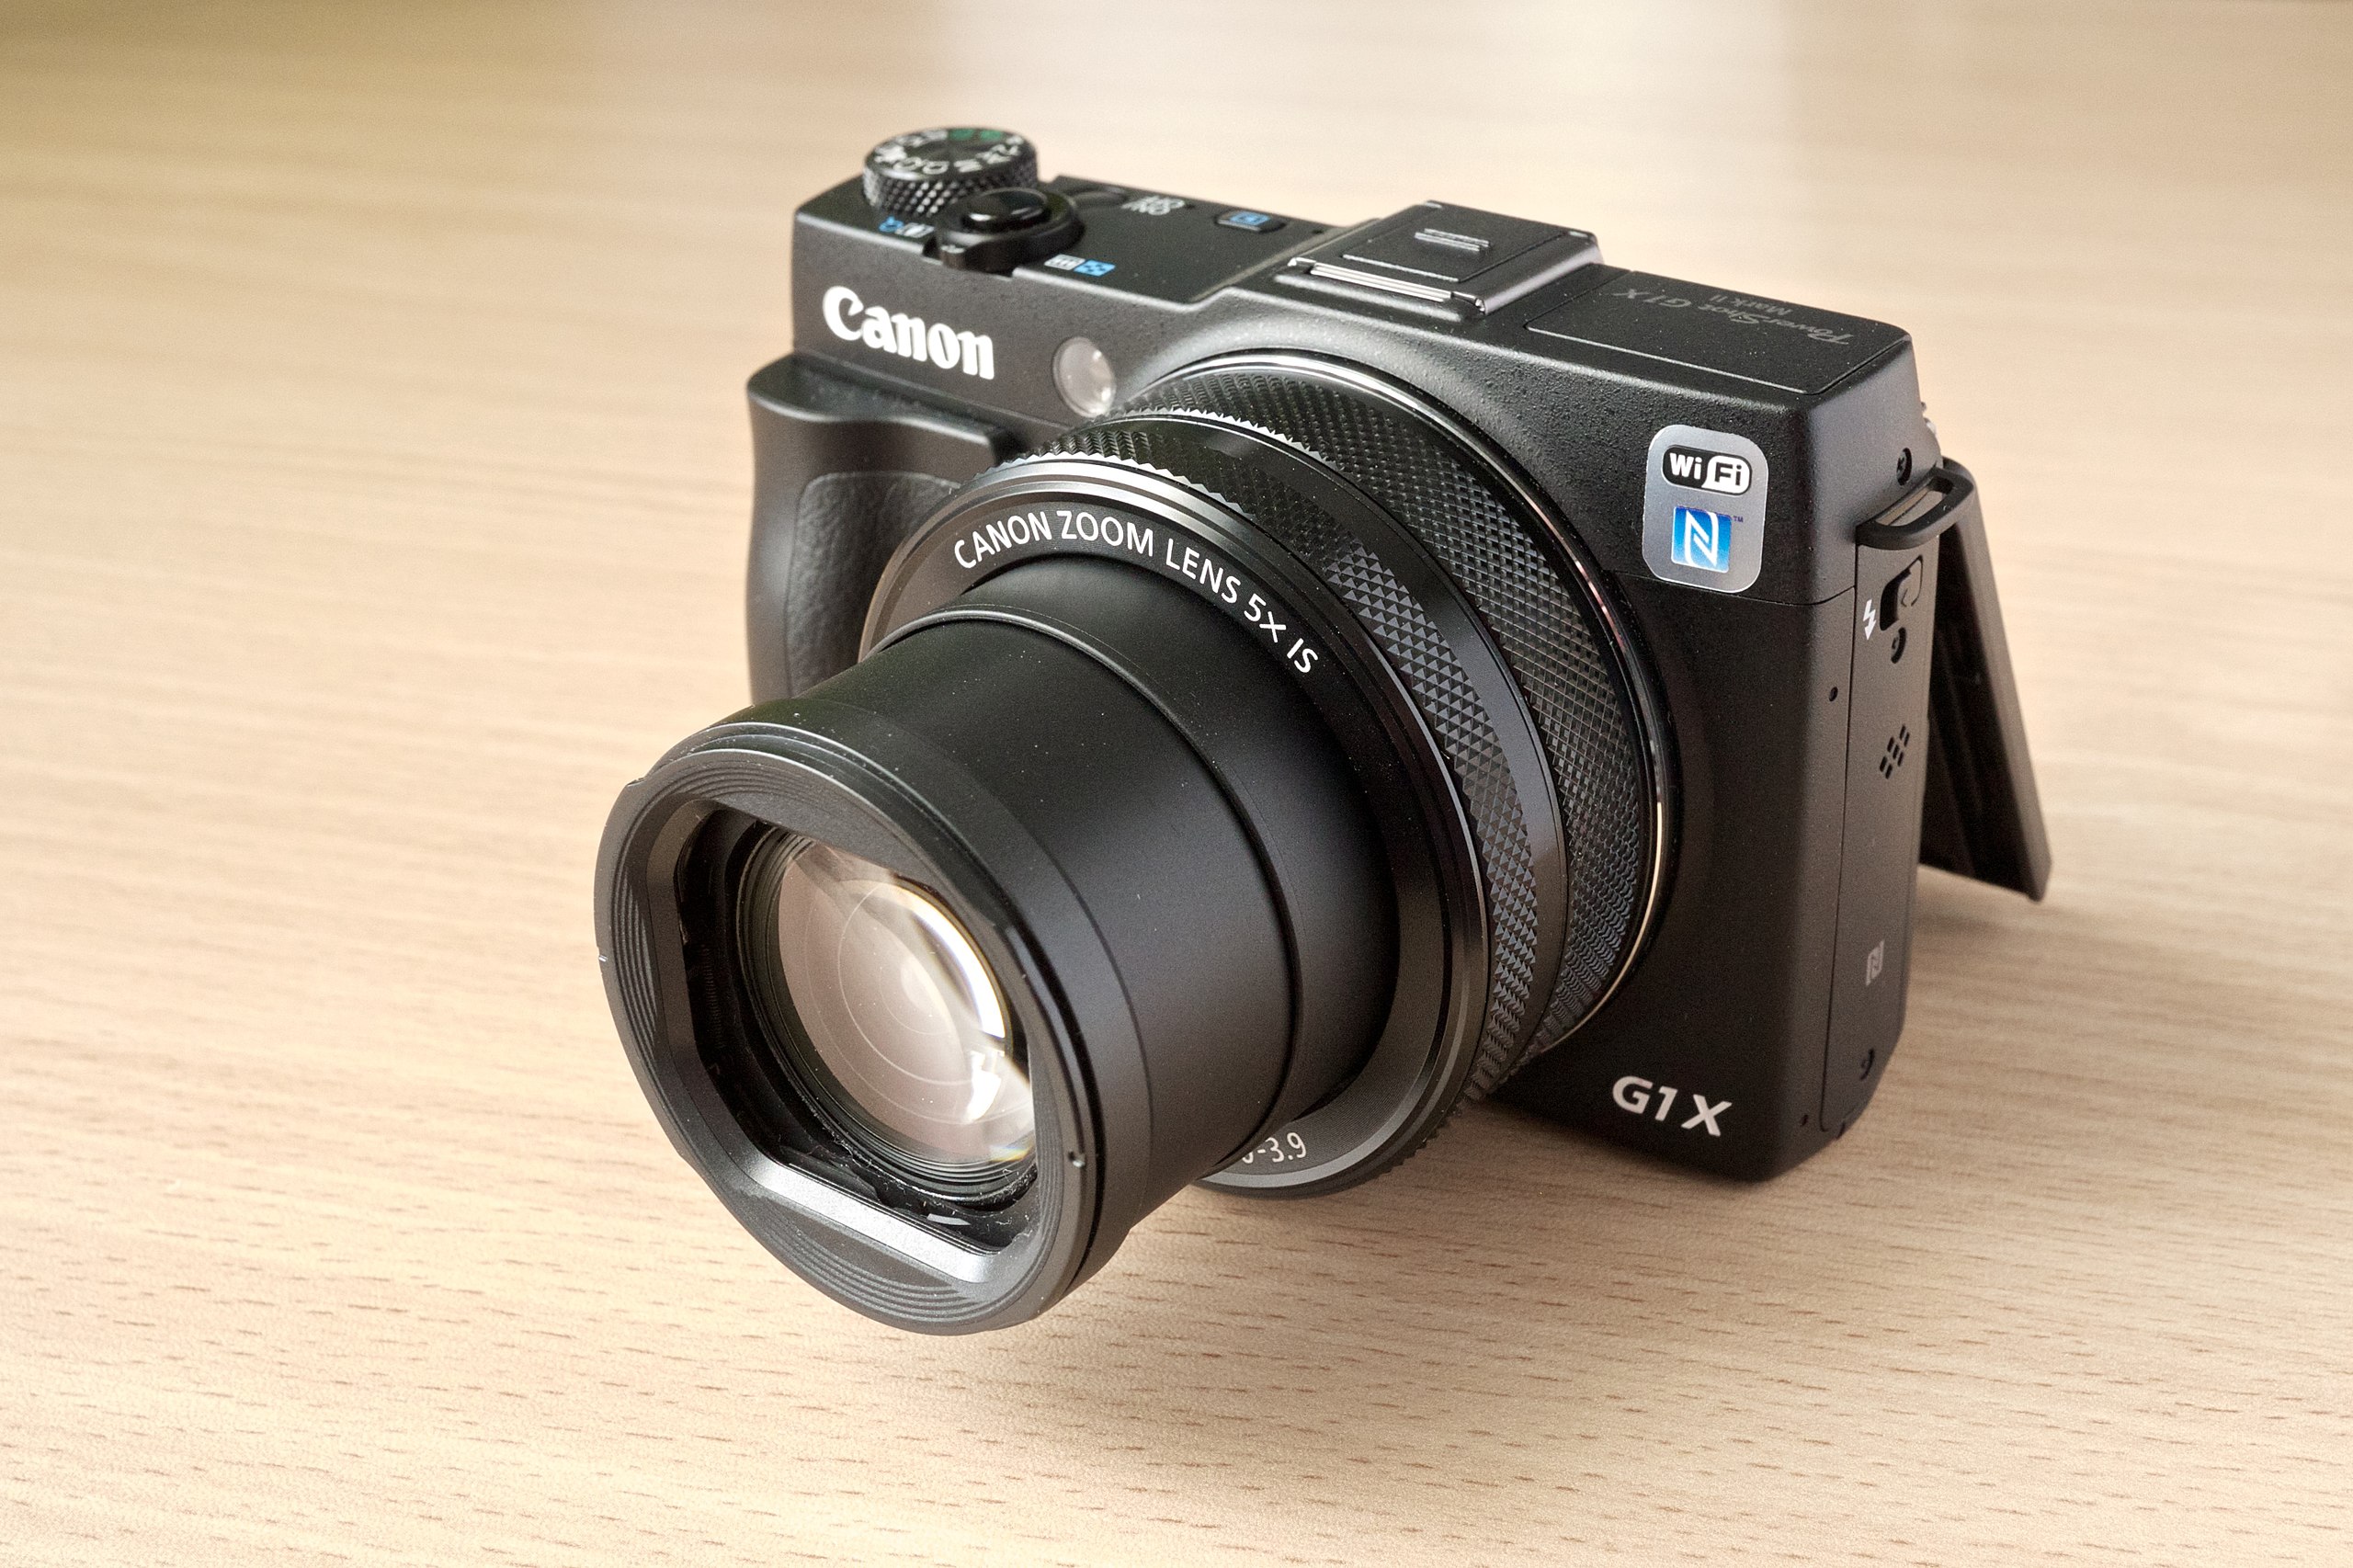 File:Canon PowerShot G1x Mark II (14064927127).jpg - Wikimedia Commons